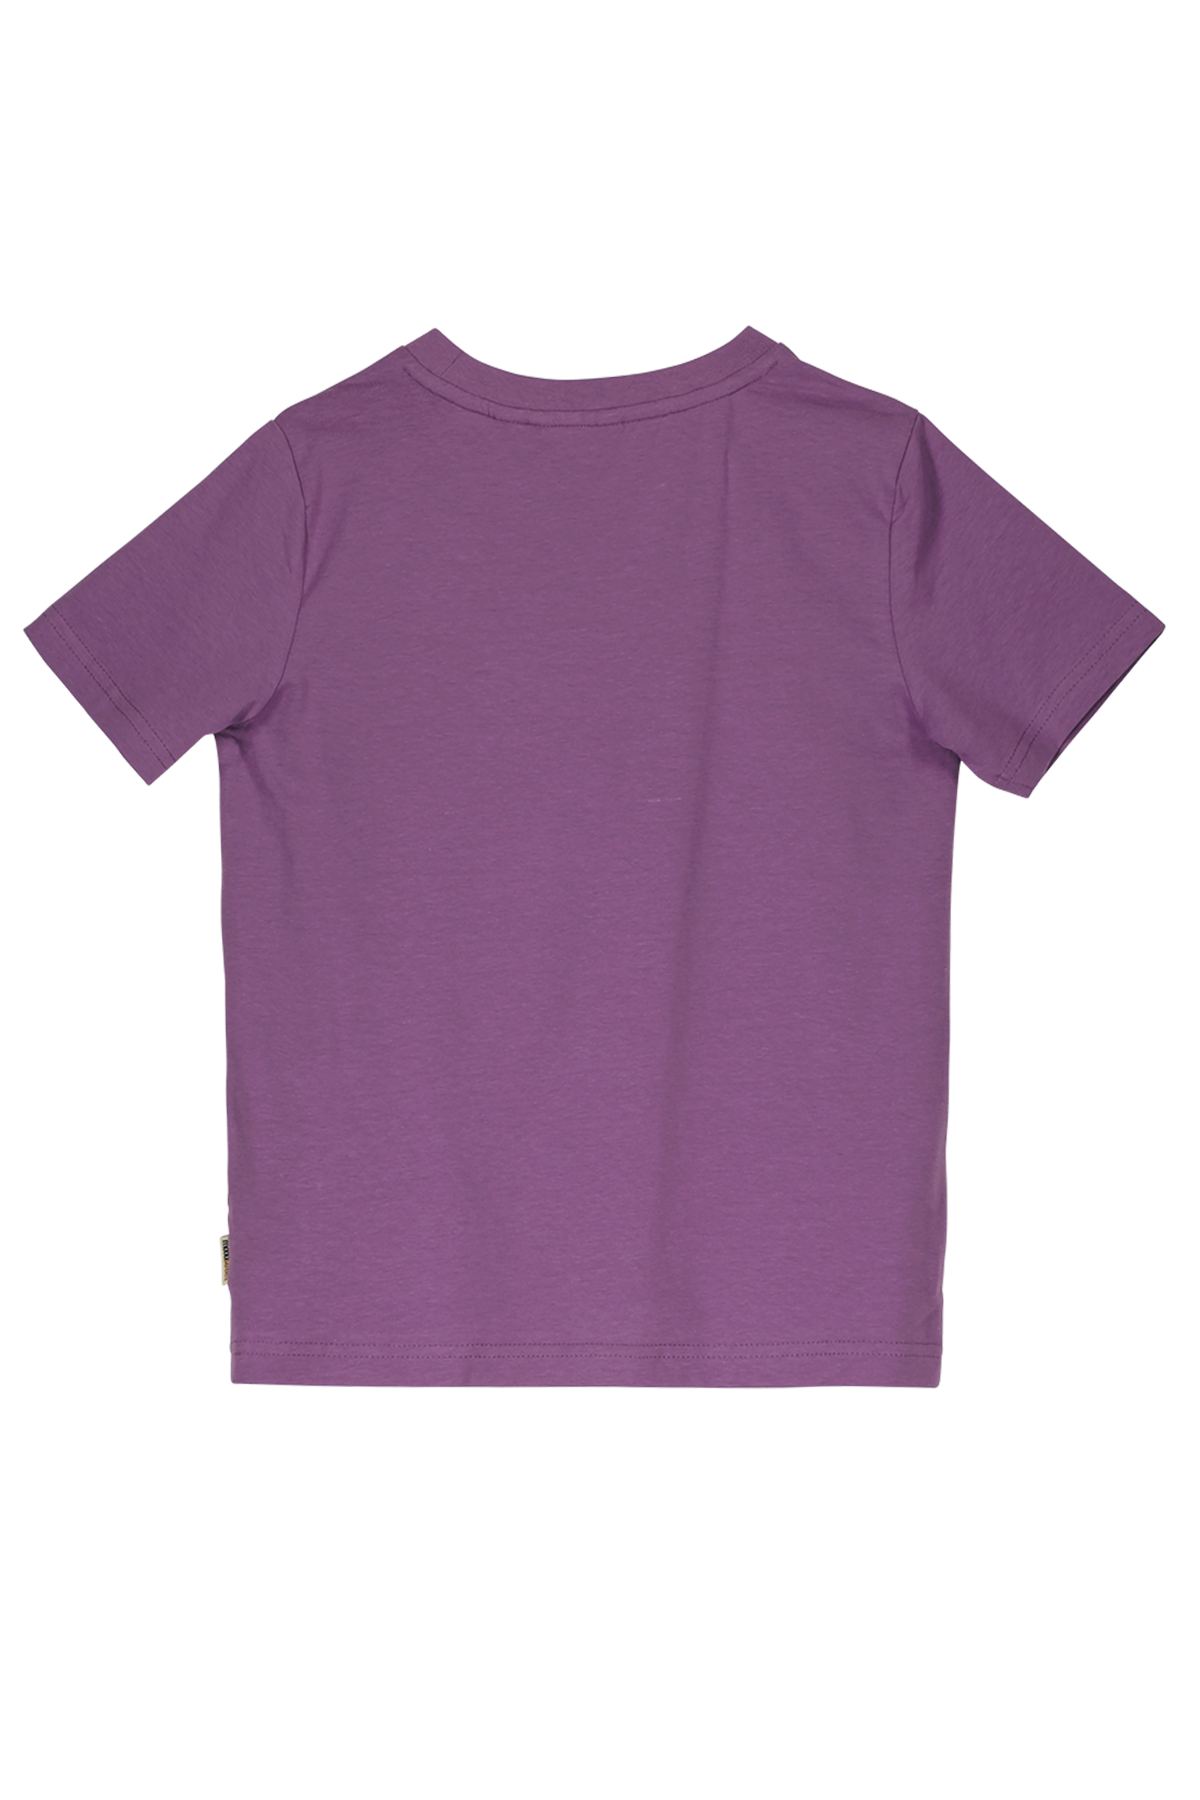 T-Shirt Boys t-shirt grape